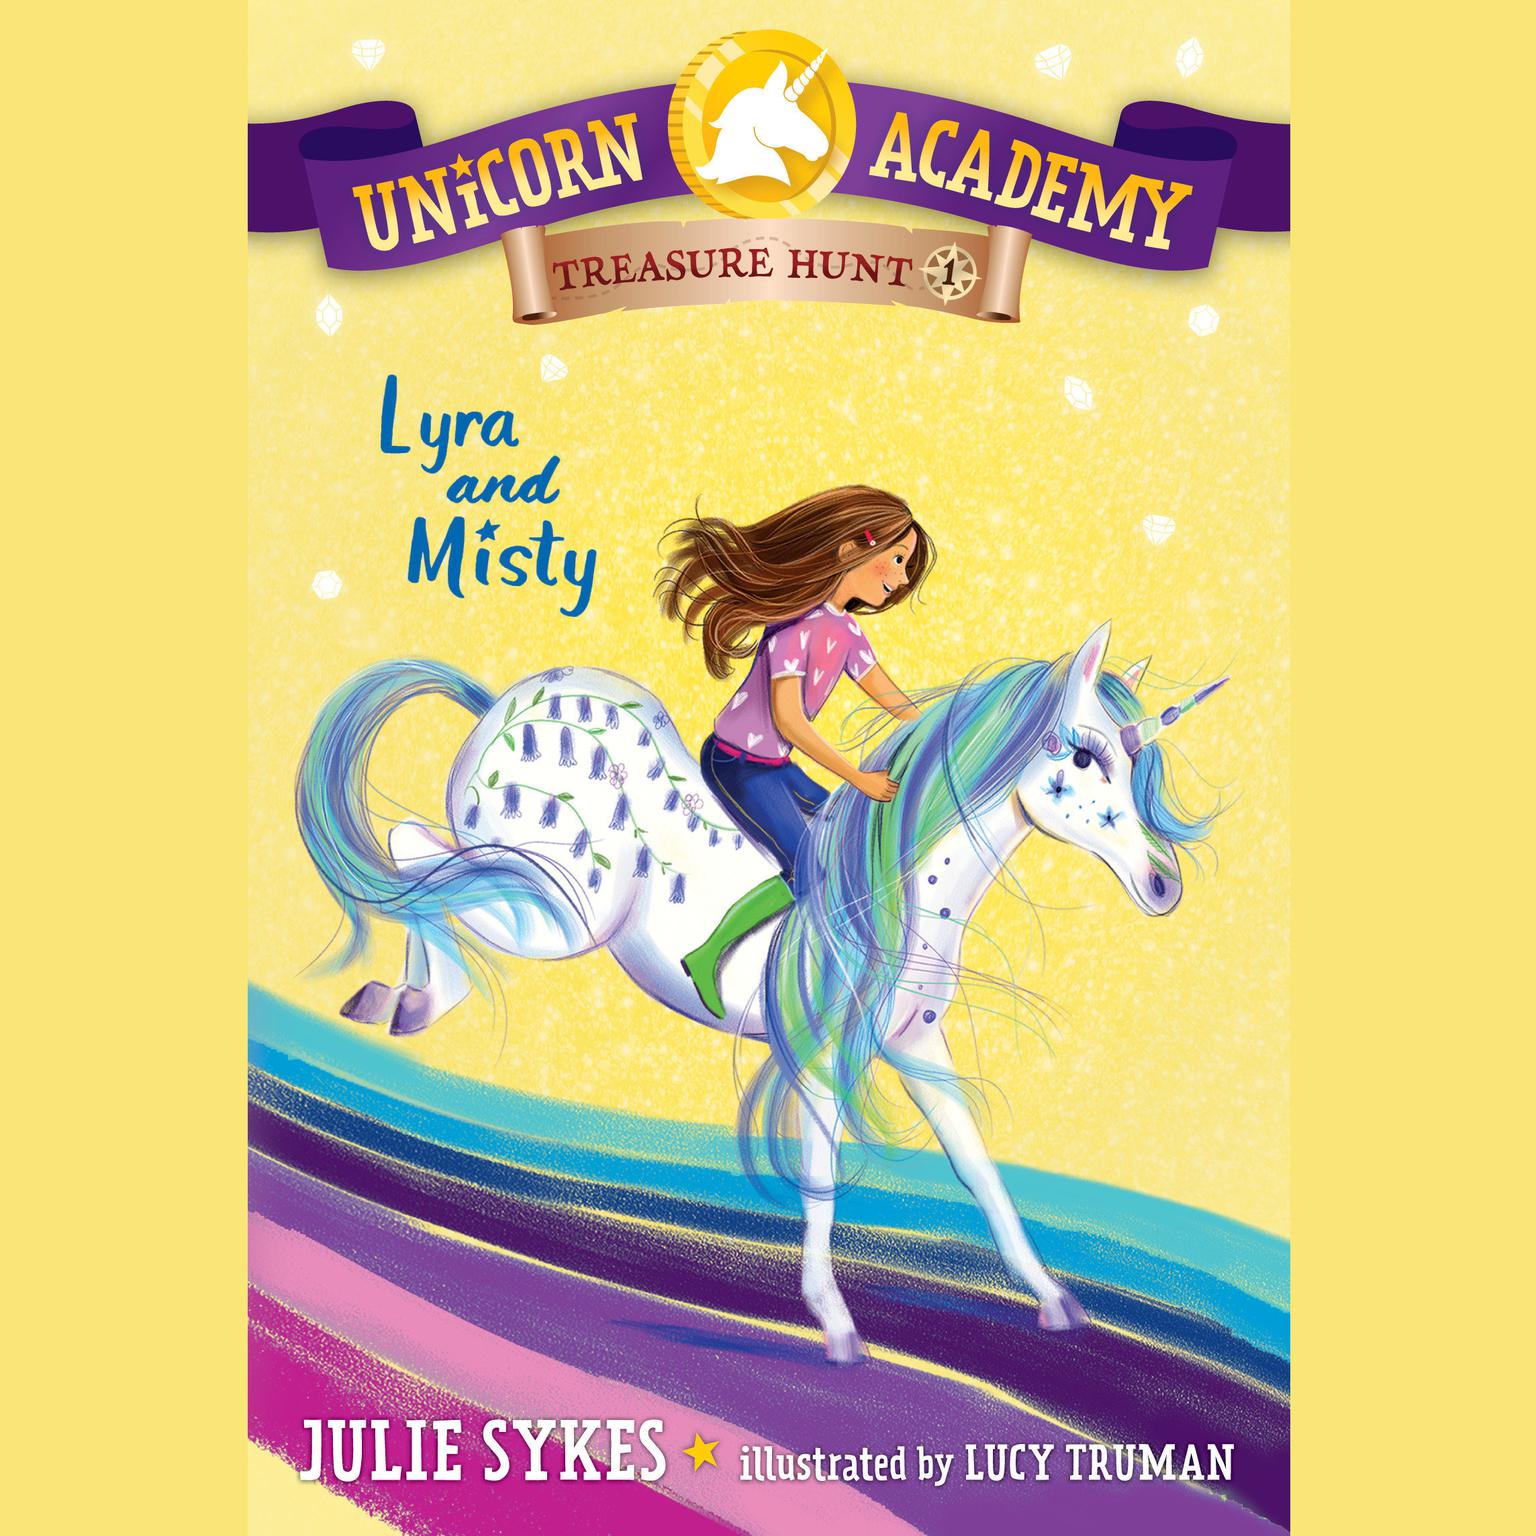 Unicorn Academy Treasure Hunt #1: Lyra and Misty Audiobook, by Julie Sykes